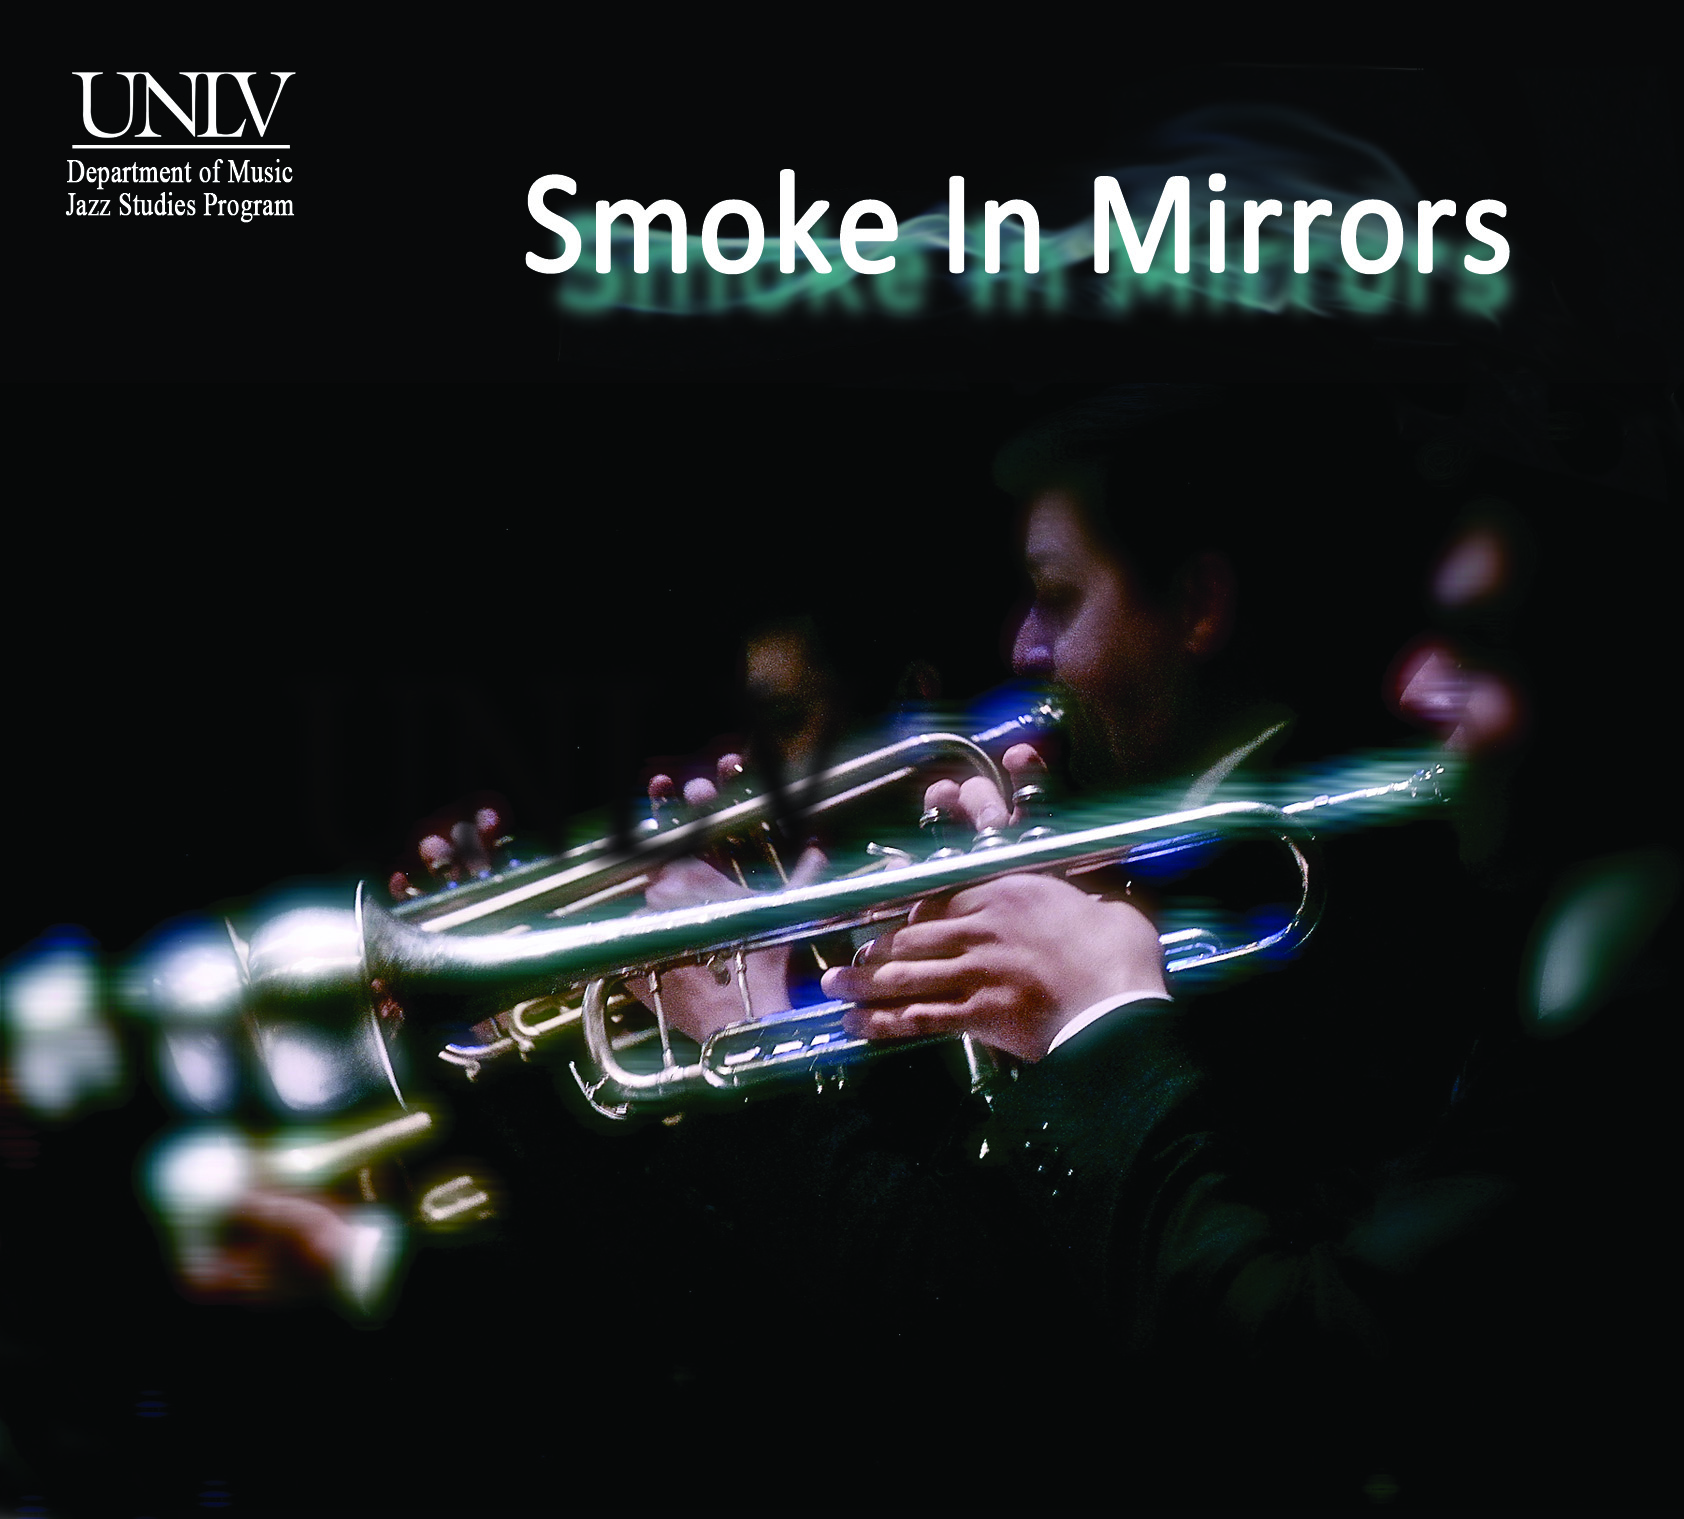 UNLV DEPARTMENT OF MUSIC JAZZ STUDIES PROGRAM - Smoke in Mirrors cover 